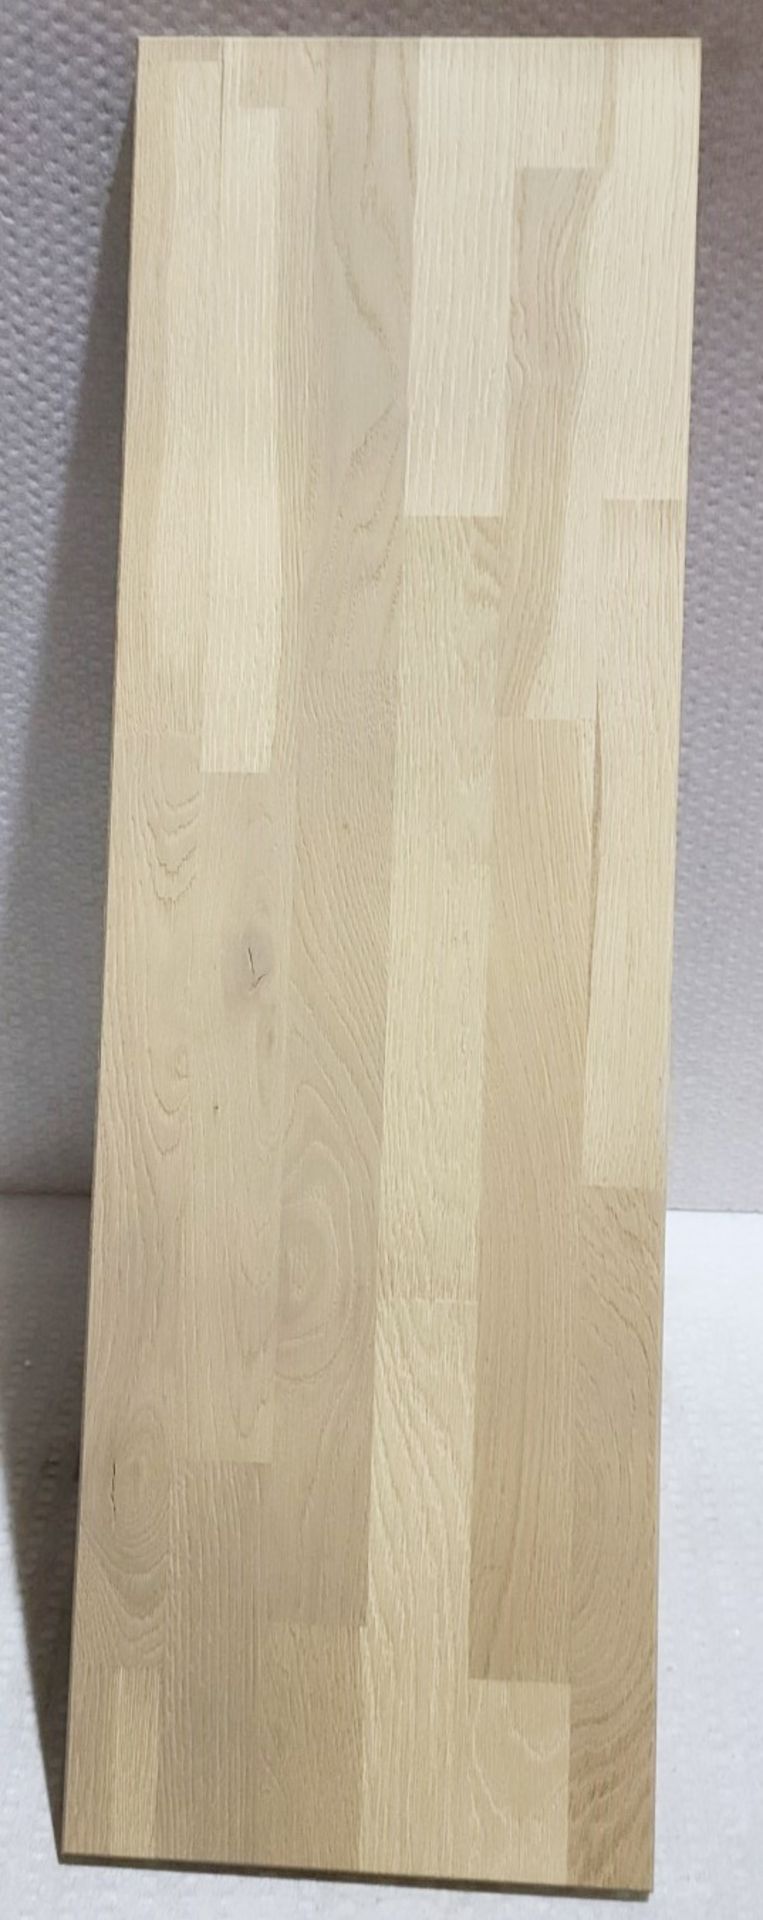 1 x WOOOD 'Gyan Legplank' Light Oak Shelf With Black Metal Braces 80cm - Image 3 of 7